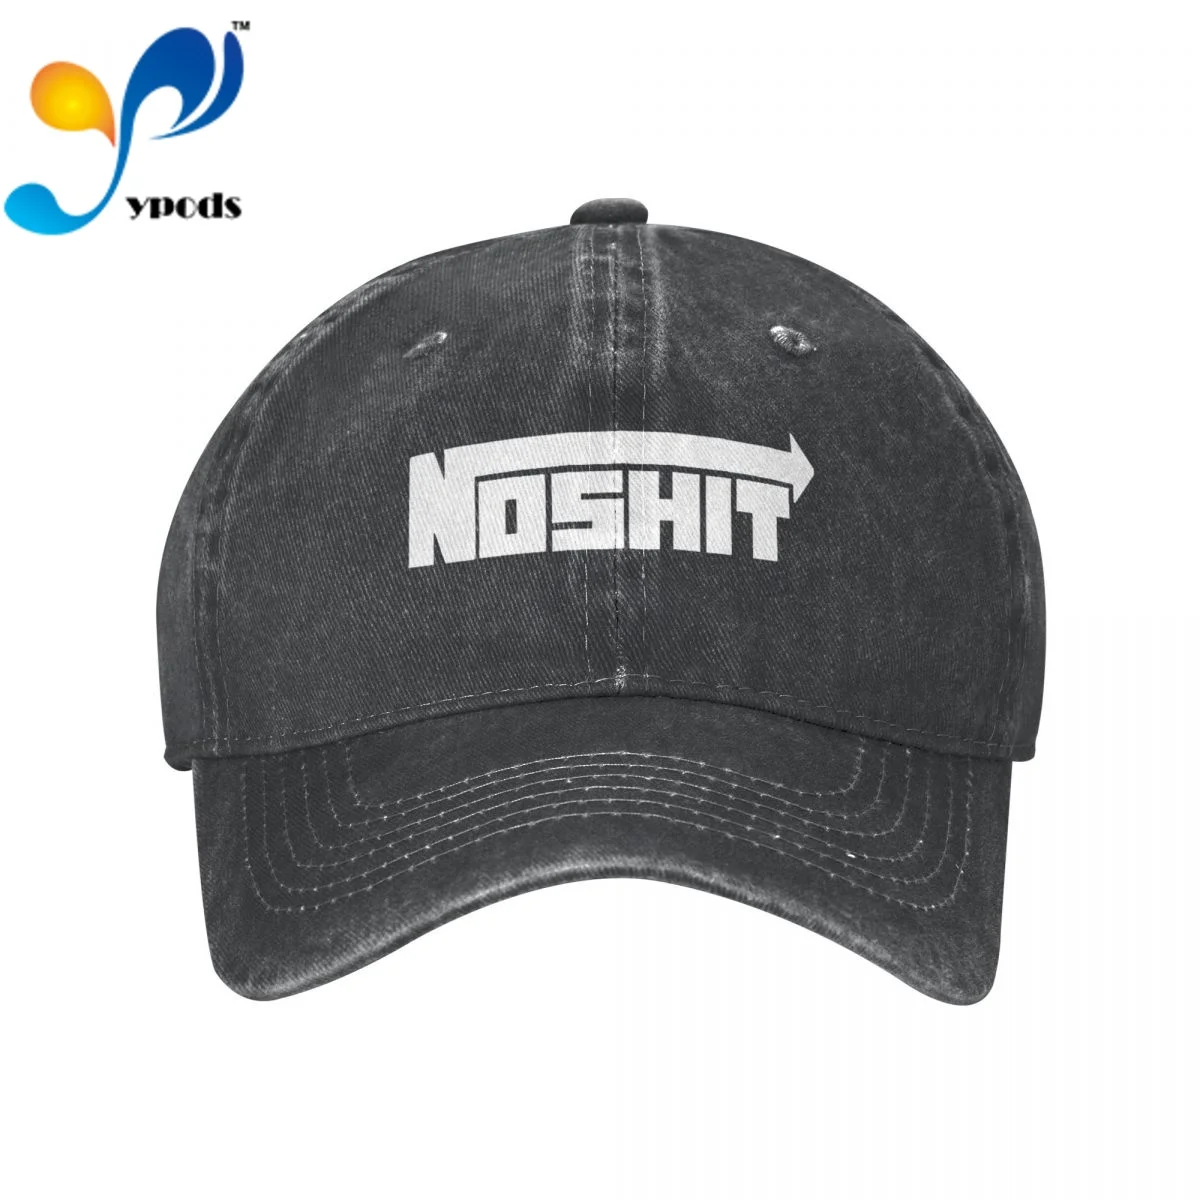 

NOShit Cotton Cap For Men Women Gorras Snapback Caps Baseball Caps Casquette Dad Hat